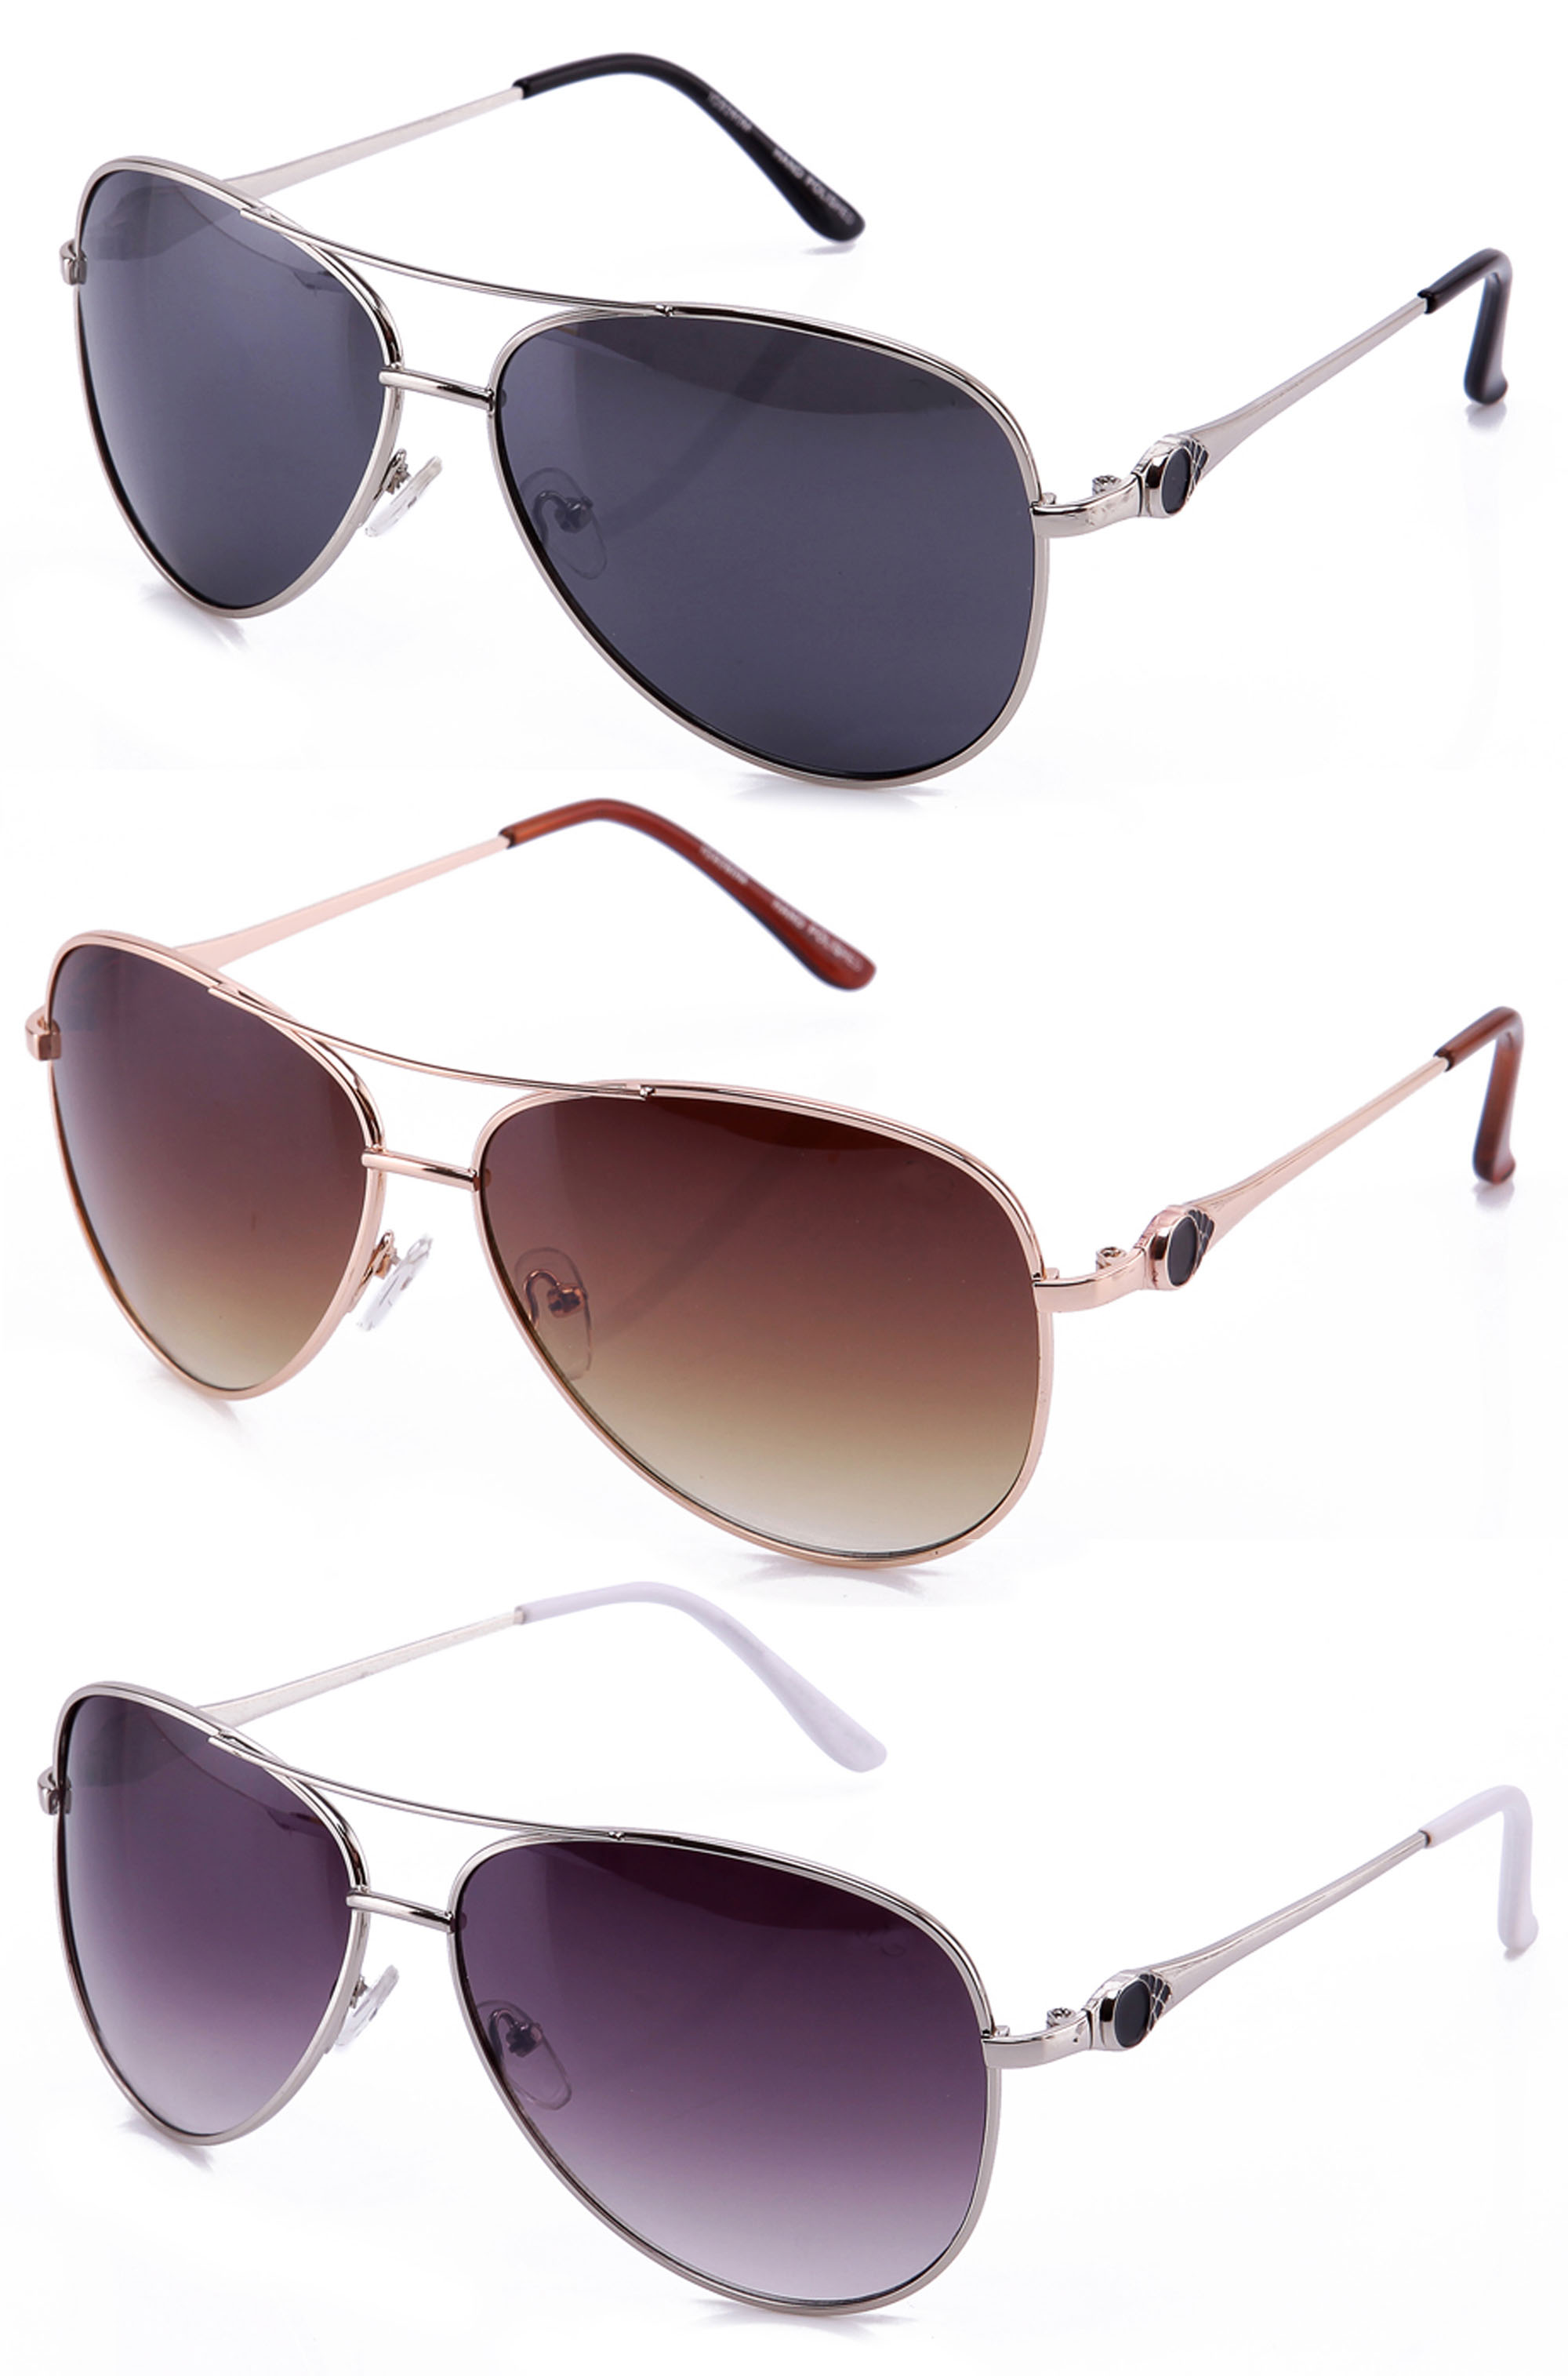 3 Packs Metal Frame Aviator Fashion Sunglasses Classic Shape for Men for Women - image 1 of 1